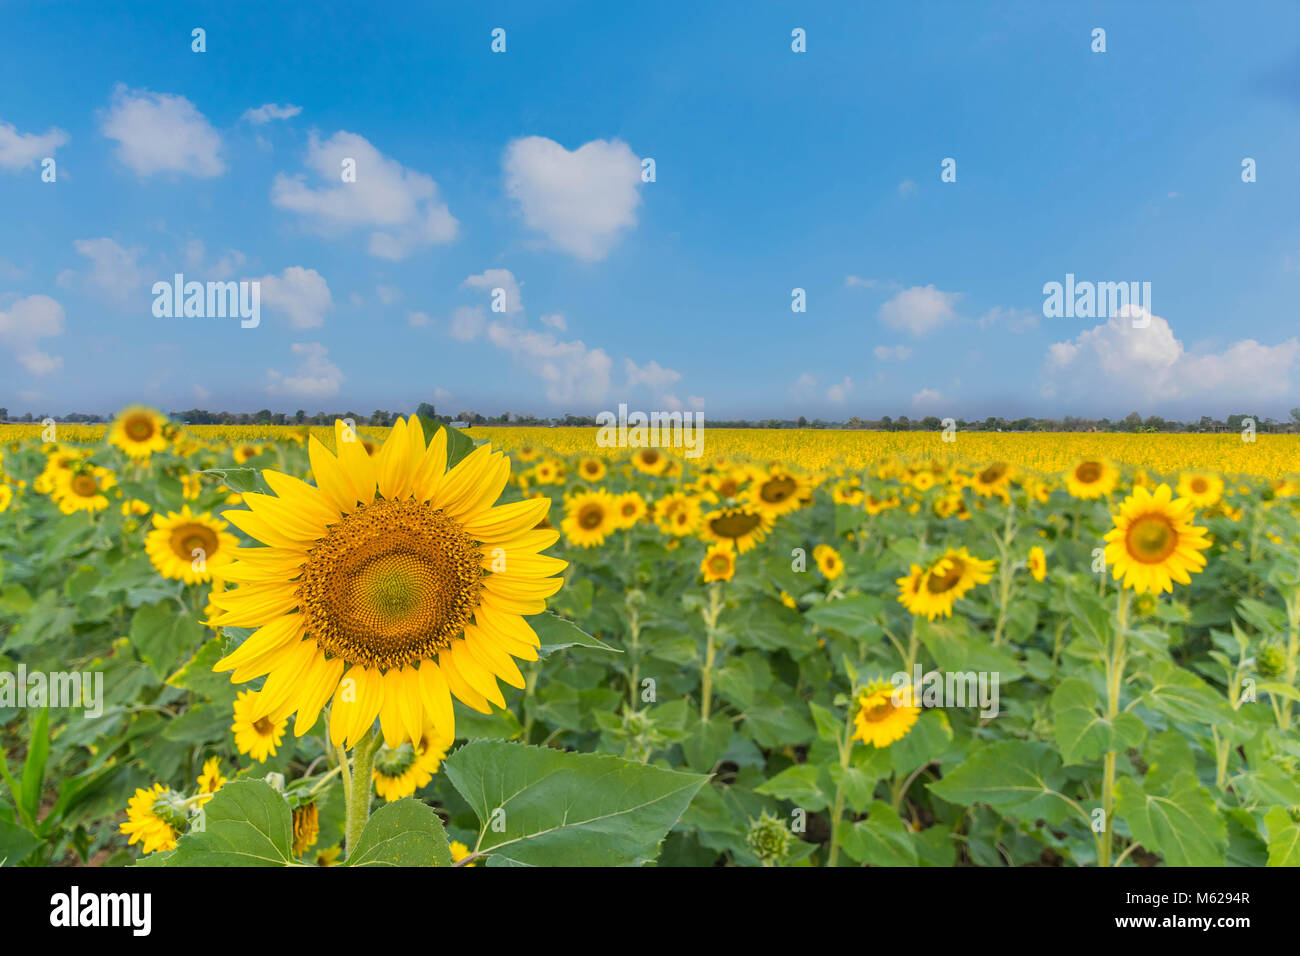 The beautiful of sunflower plant field with the Sunn hemp, Indian hemp, Madras hemp, Chanvre Indien, Crotalaria juncea, Crotalaria spectabilis, plant  Stock Photo